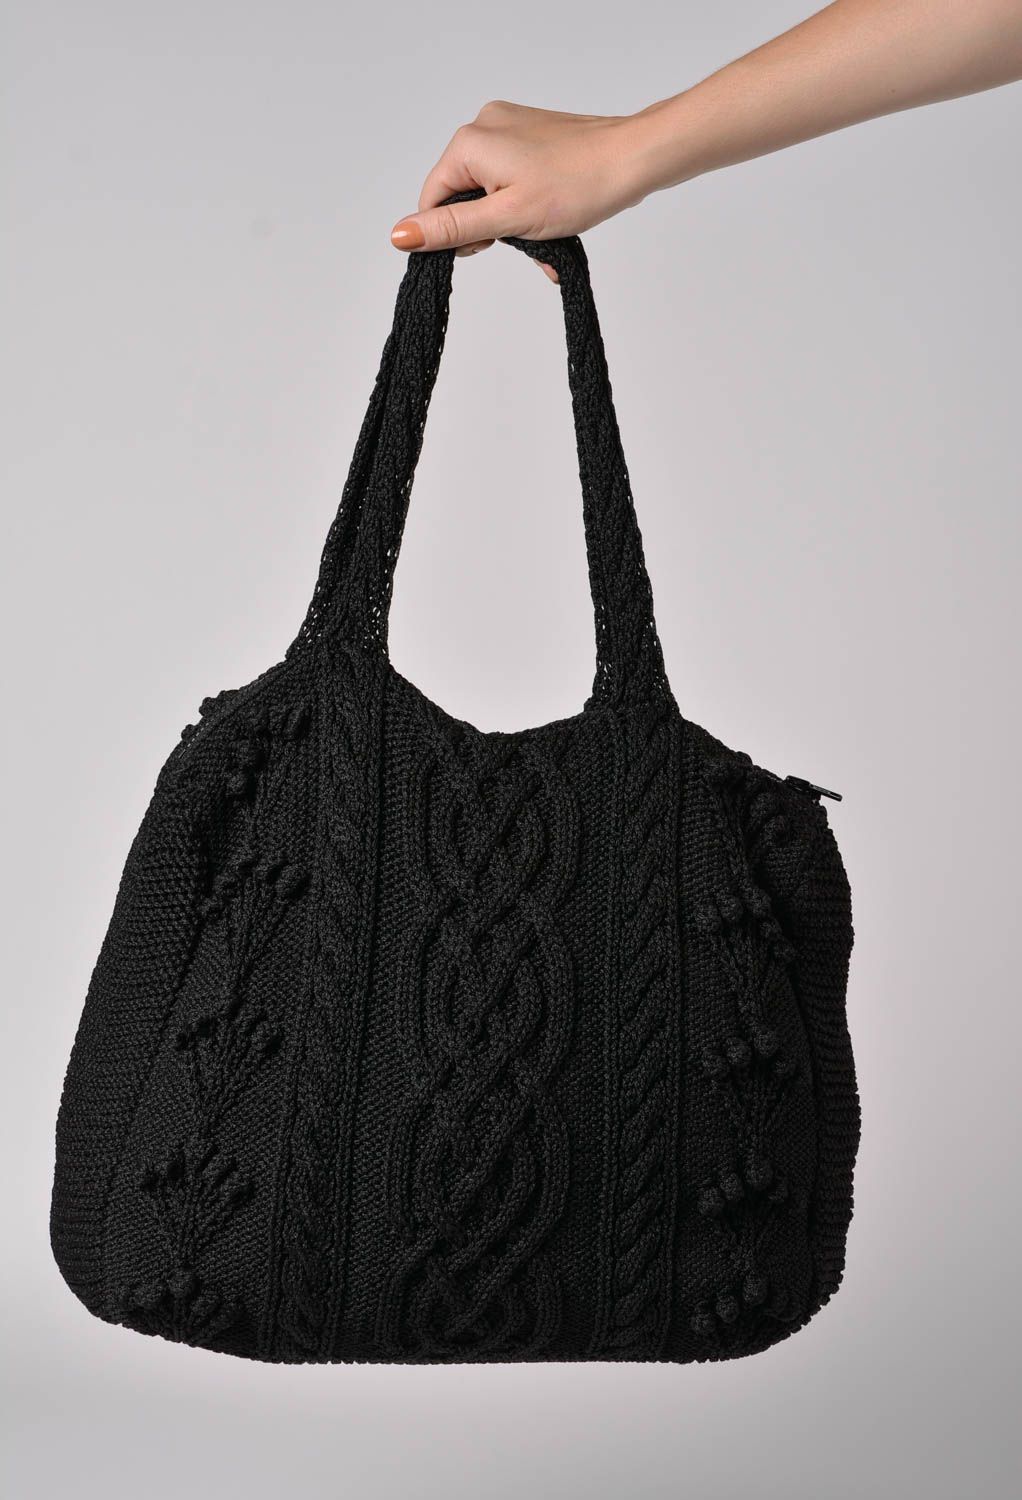 Knitted female handbag stylish black lined handmade purse for women photo 2